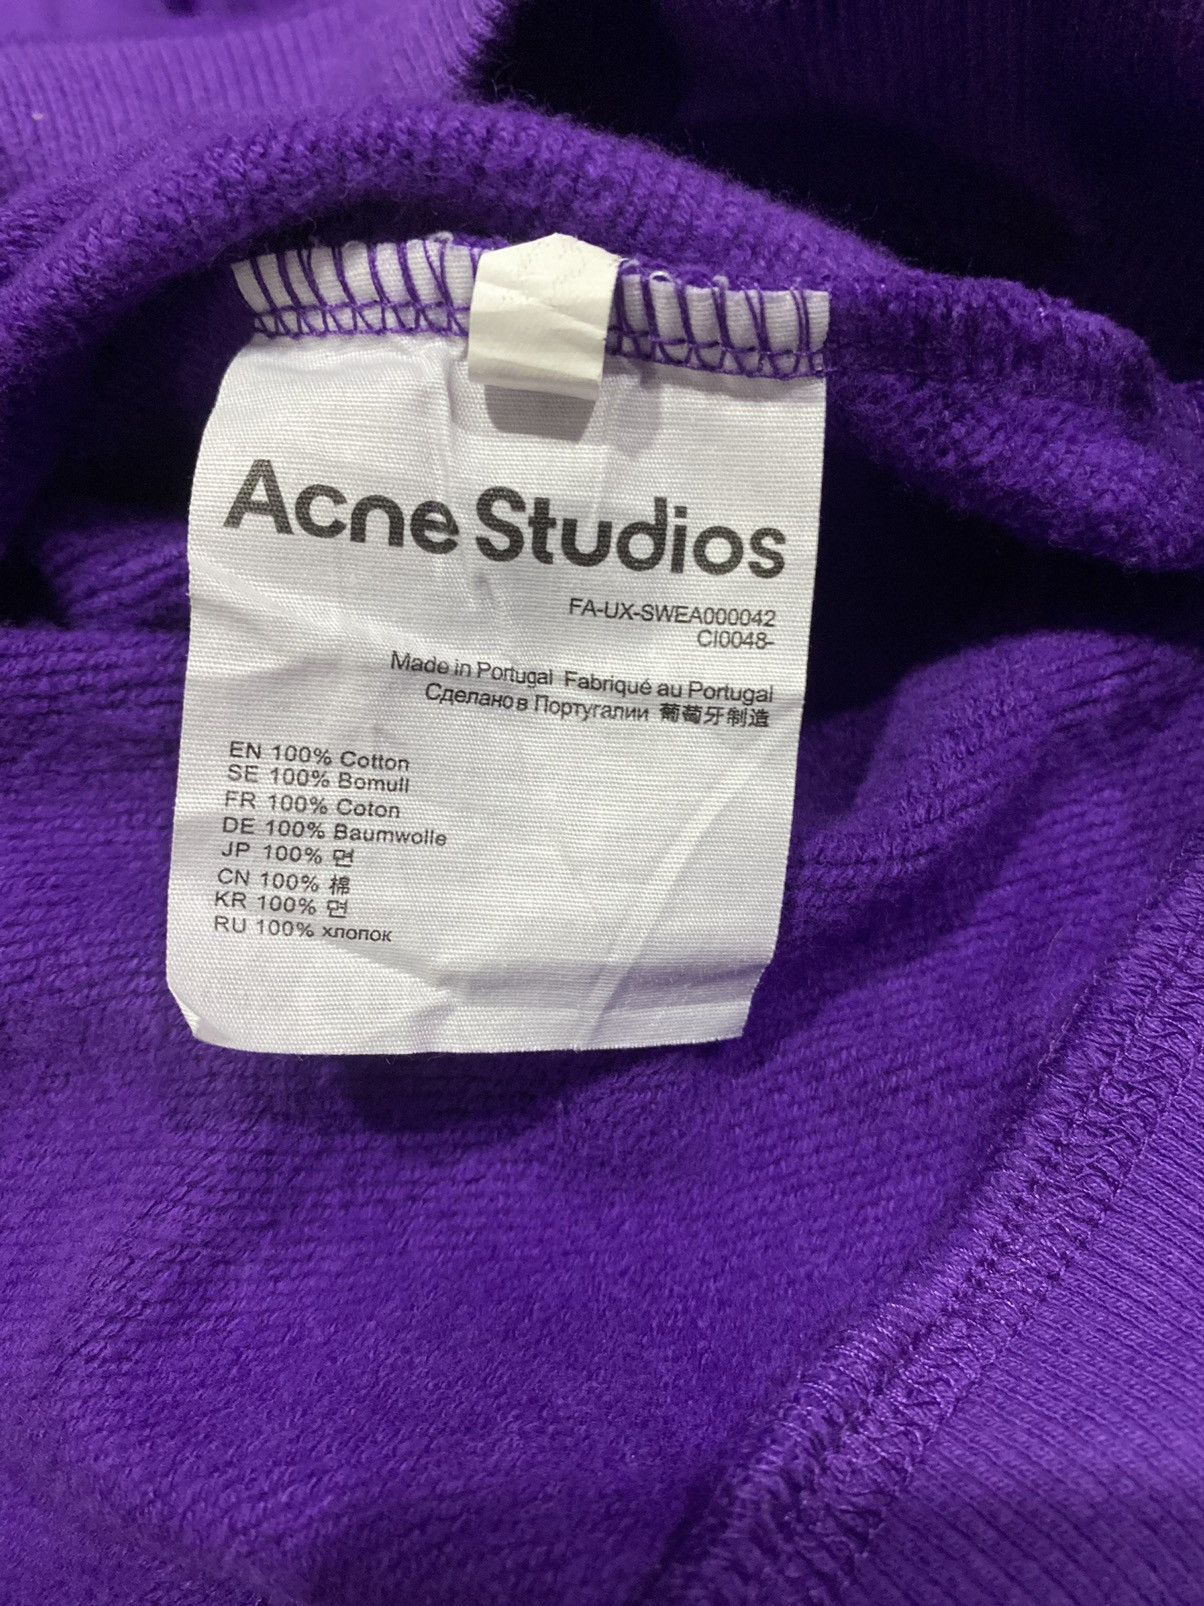 Acne Studios Ance Studios Sweatshirt Size US XS / EU 42 / 0 - 8 Thumbnail